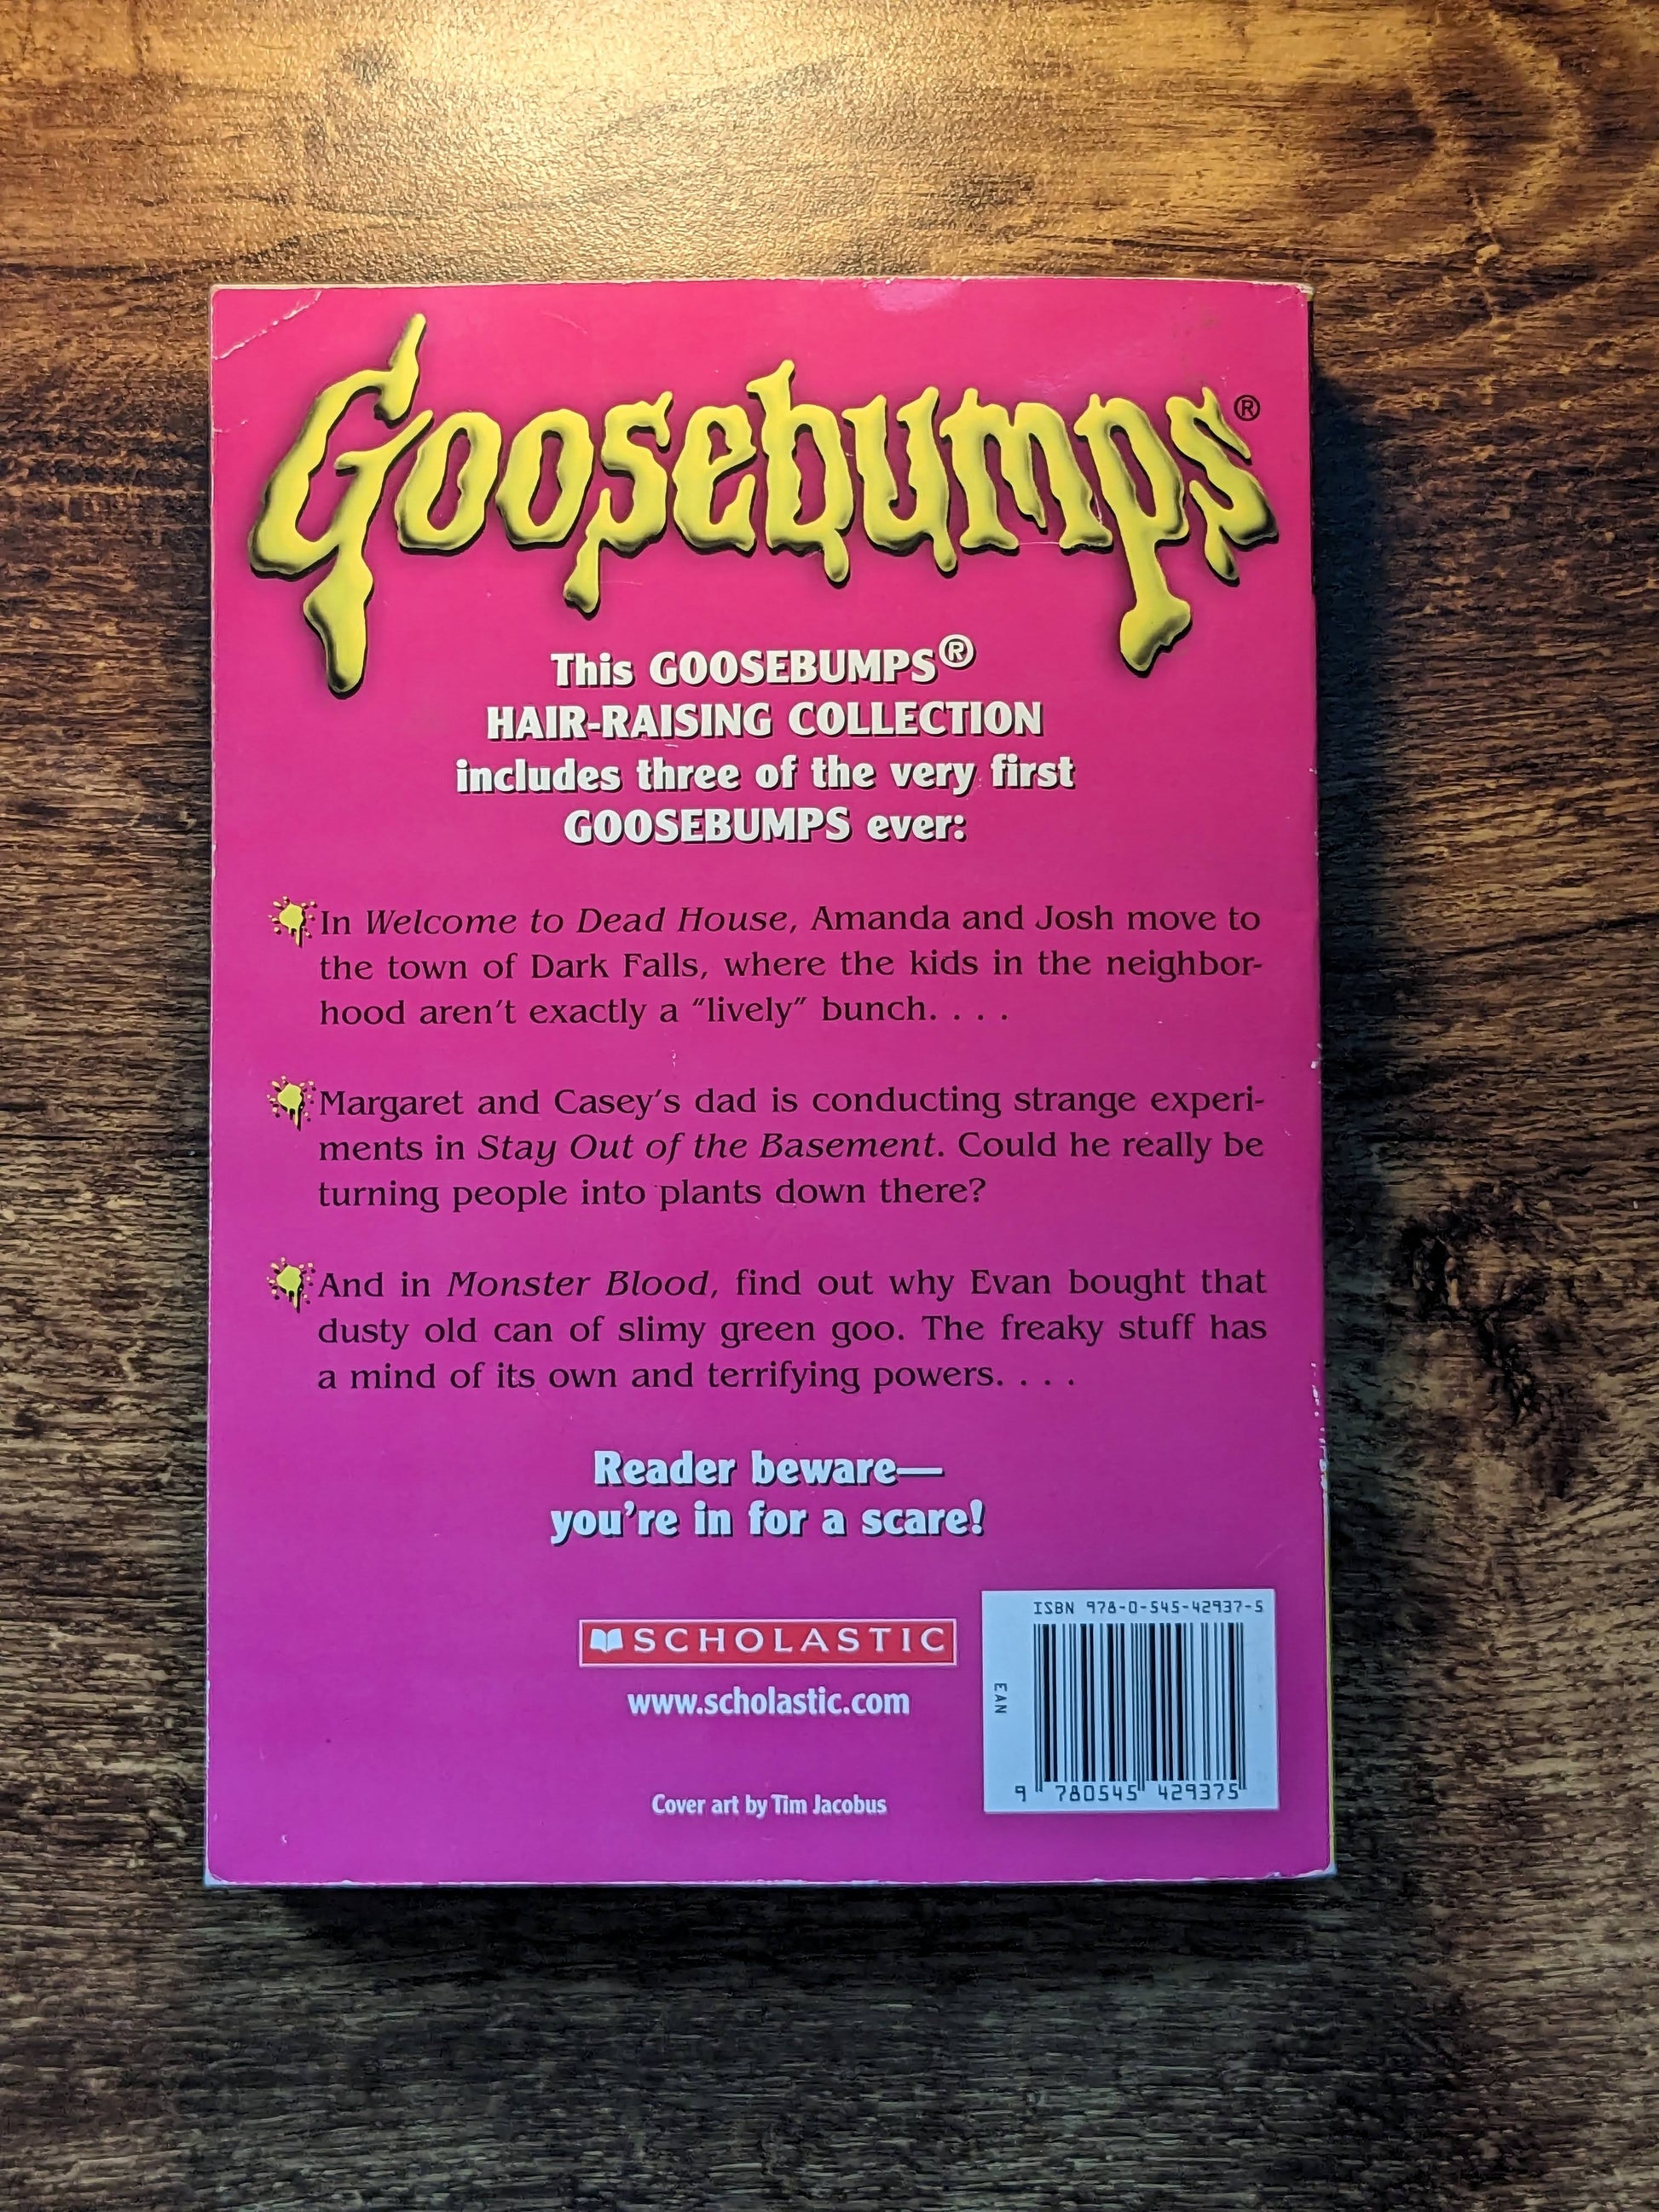 Goosebumps Hair-Raising Collection (Paperback) 3 Tales by R.L. Stine - Asylum Books